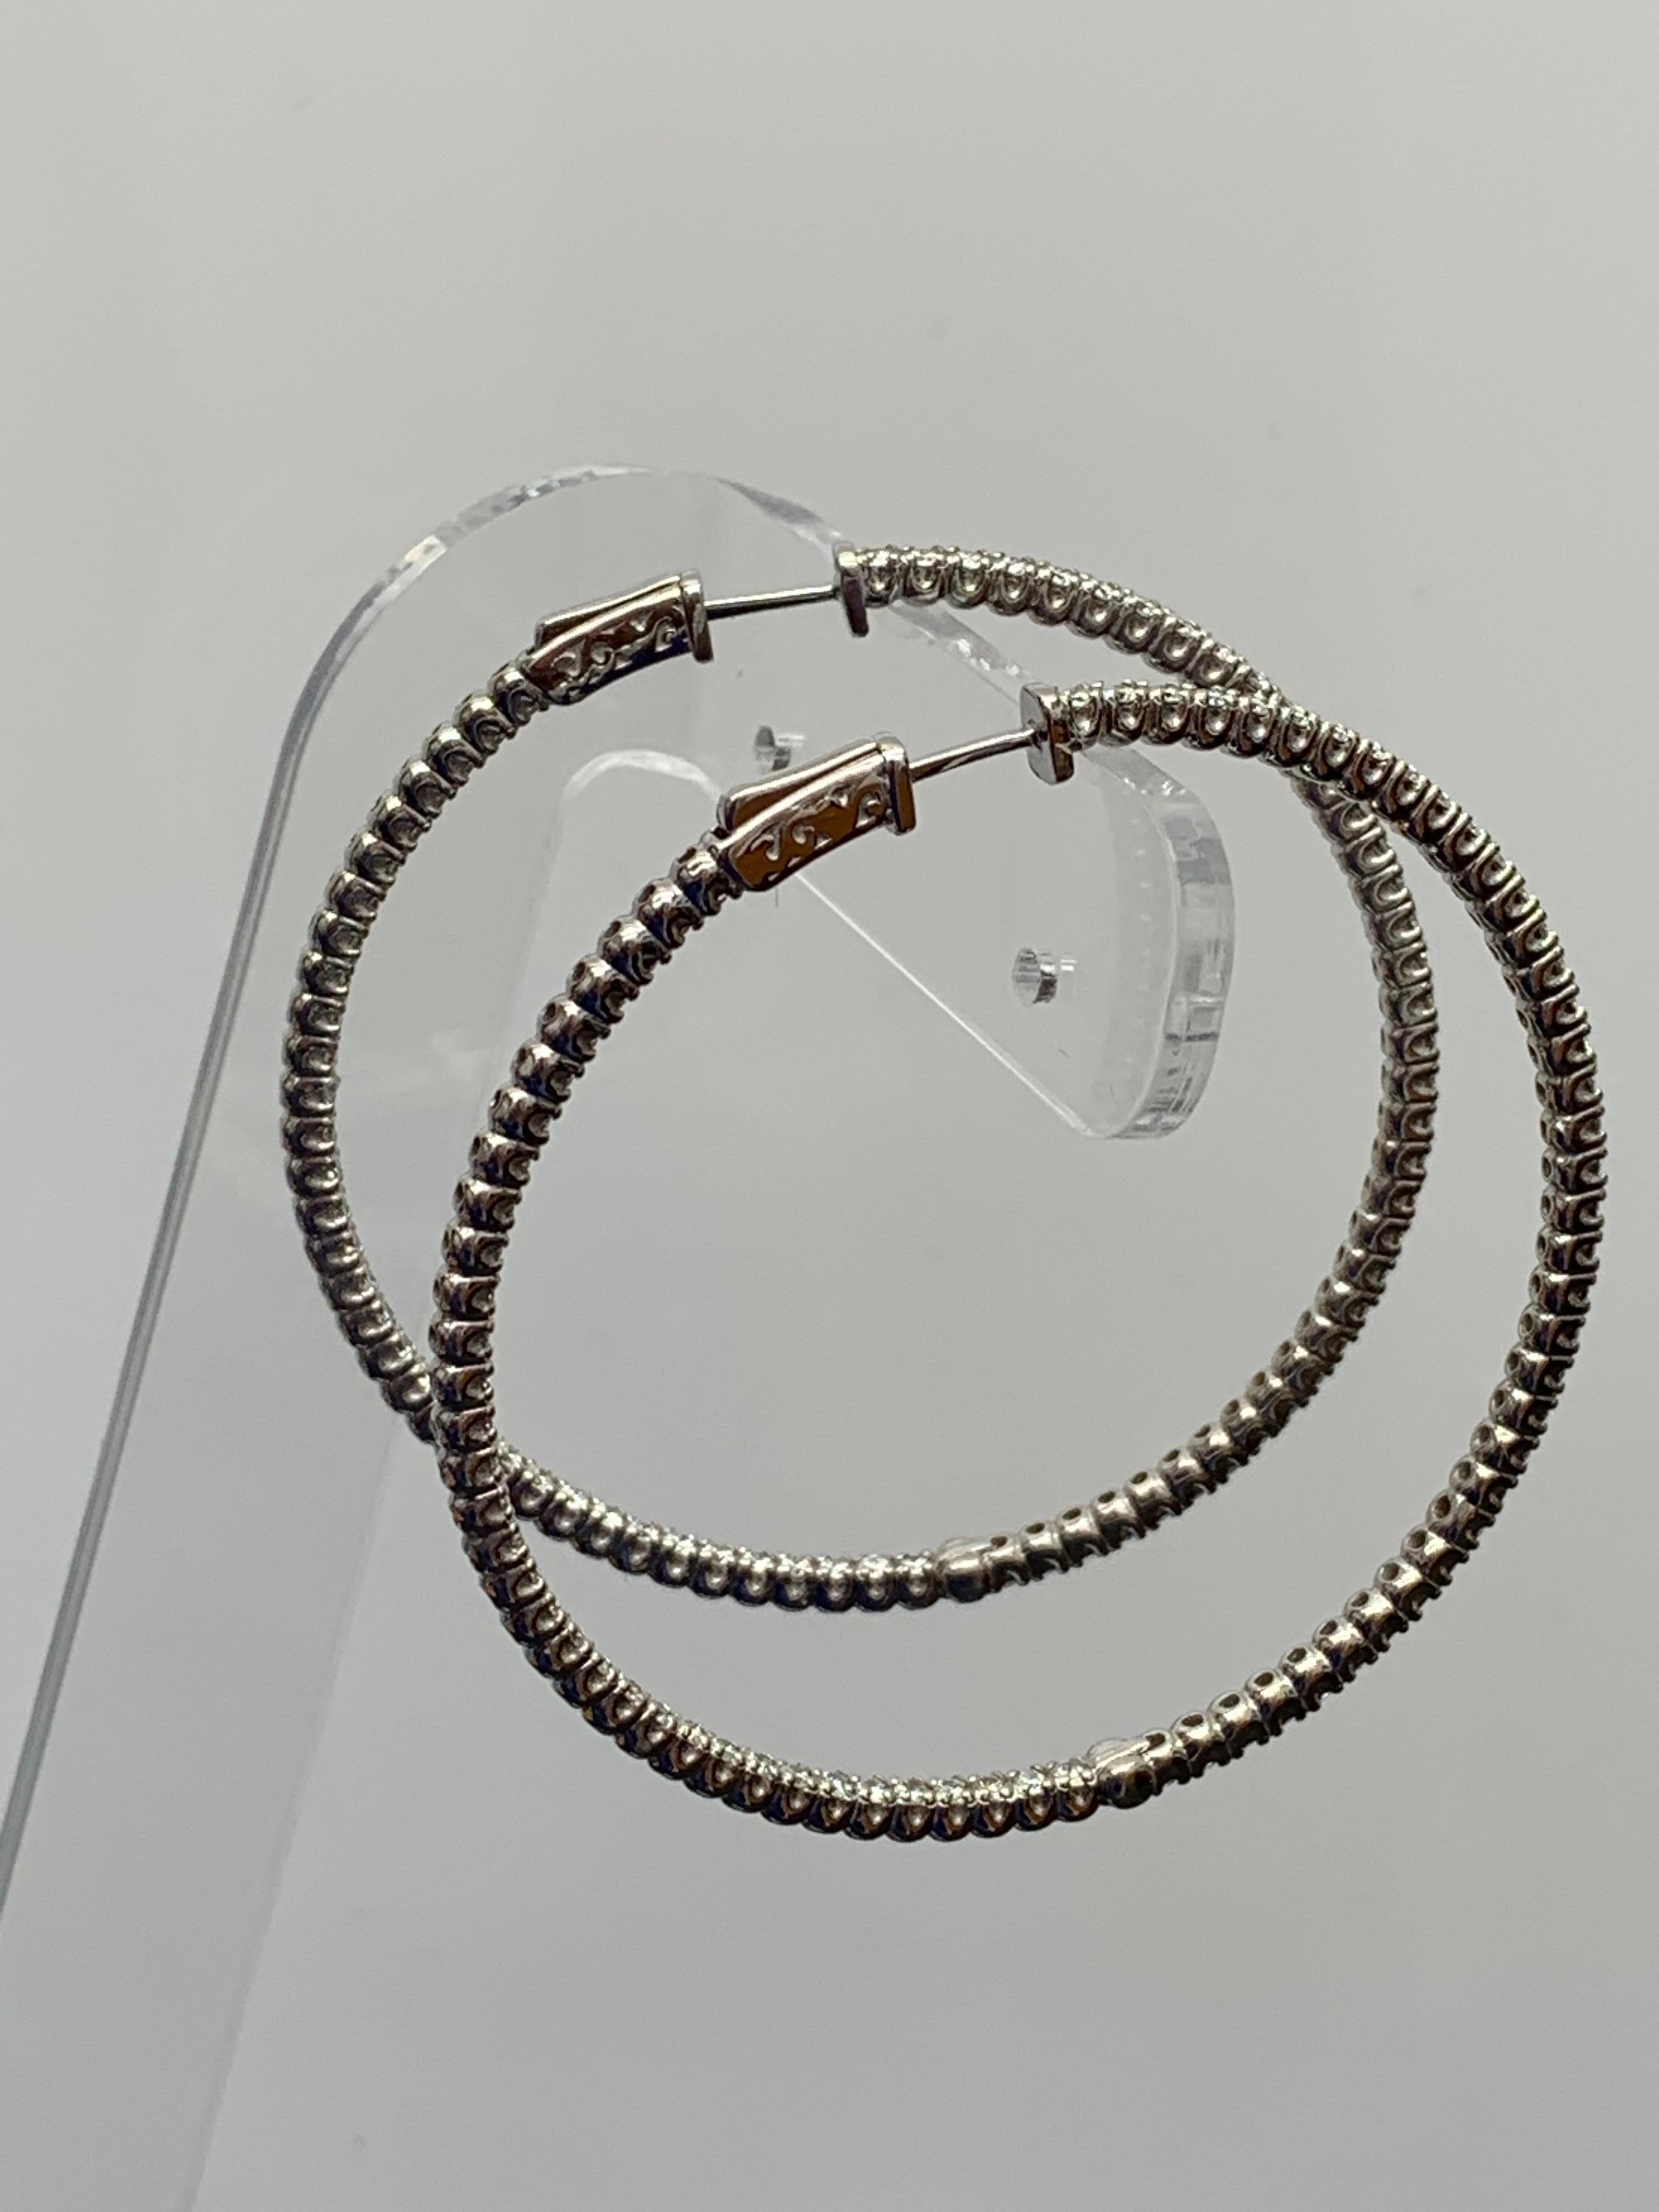 3.01 Carat Round Cut Diamond Hoop Earrings in 14k White Gold For Sale 3